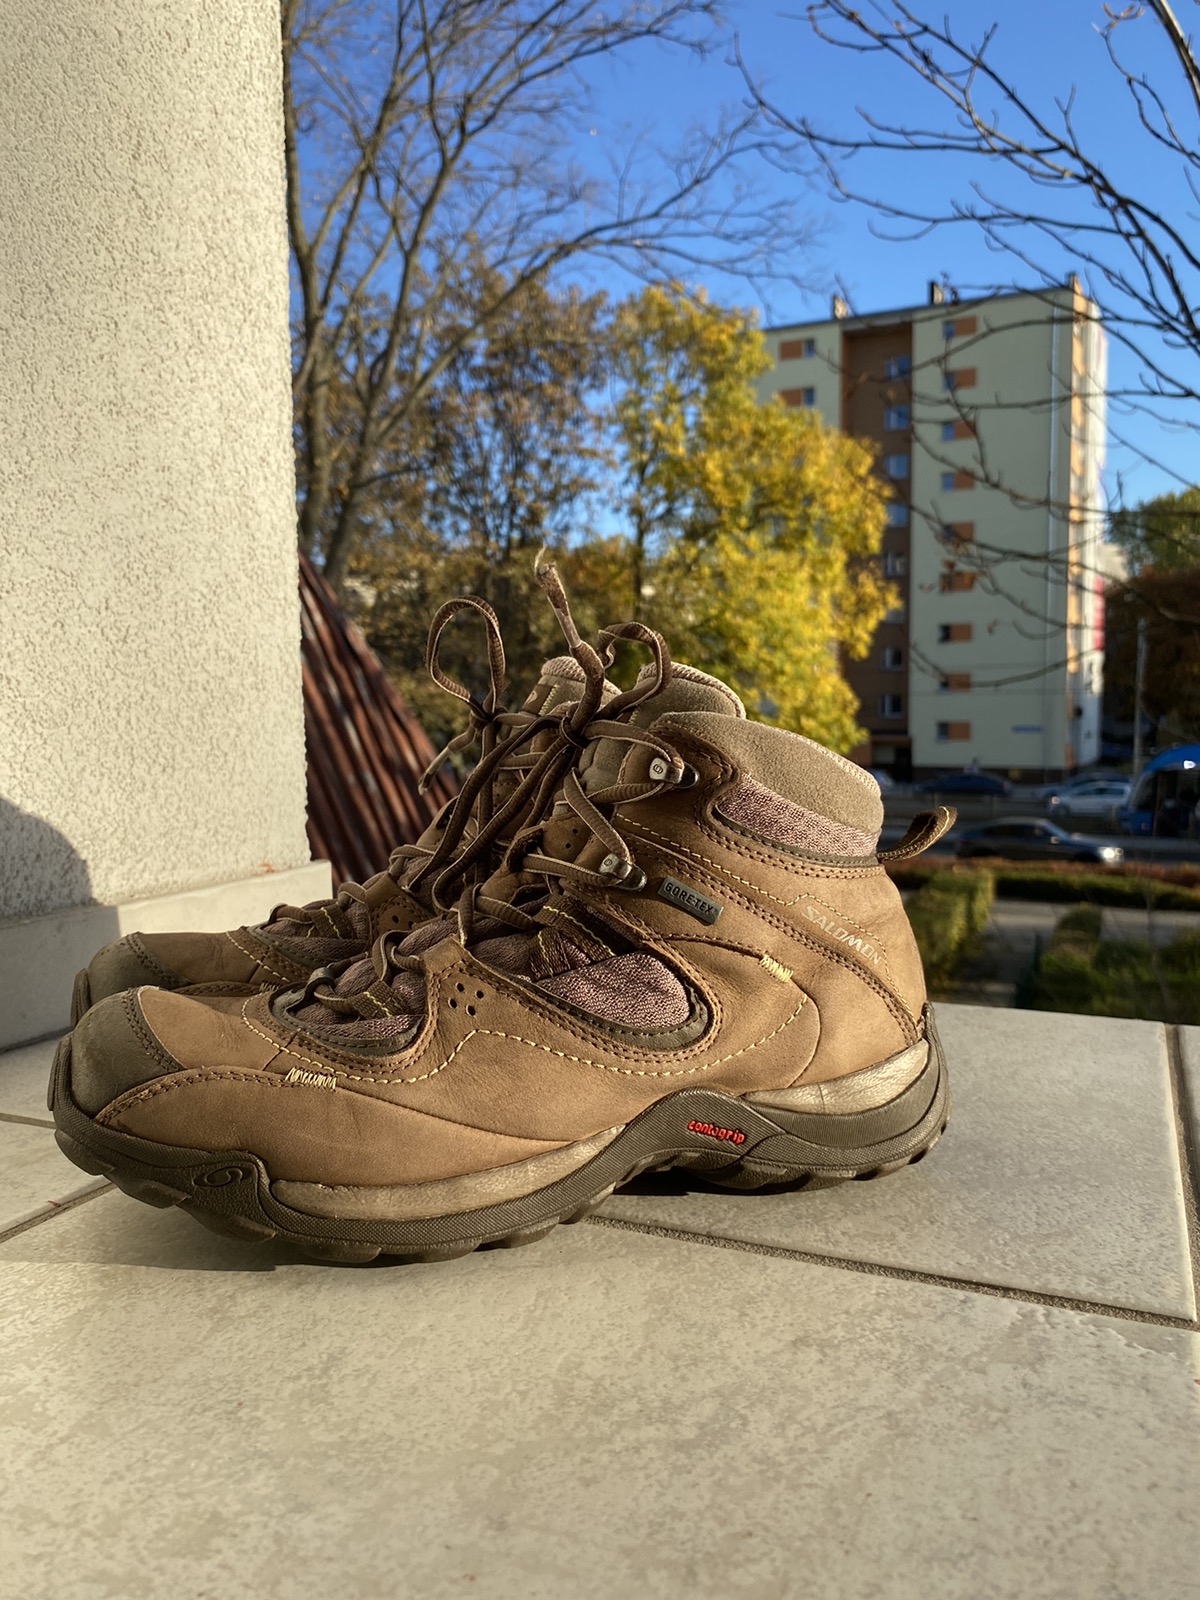 Salomon goretex high boots